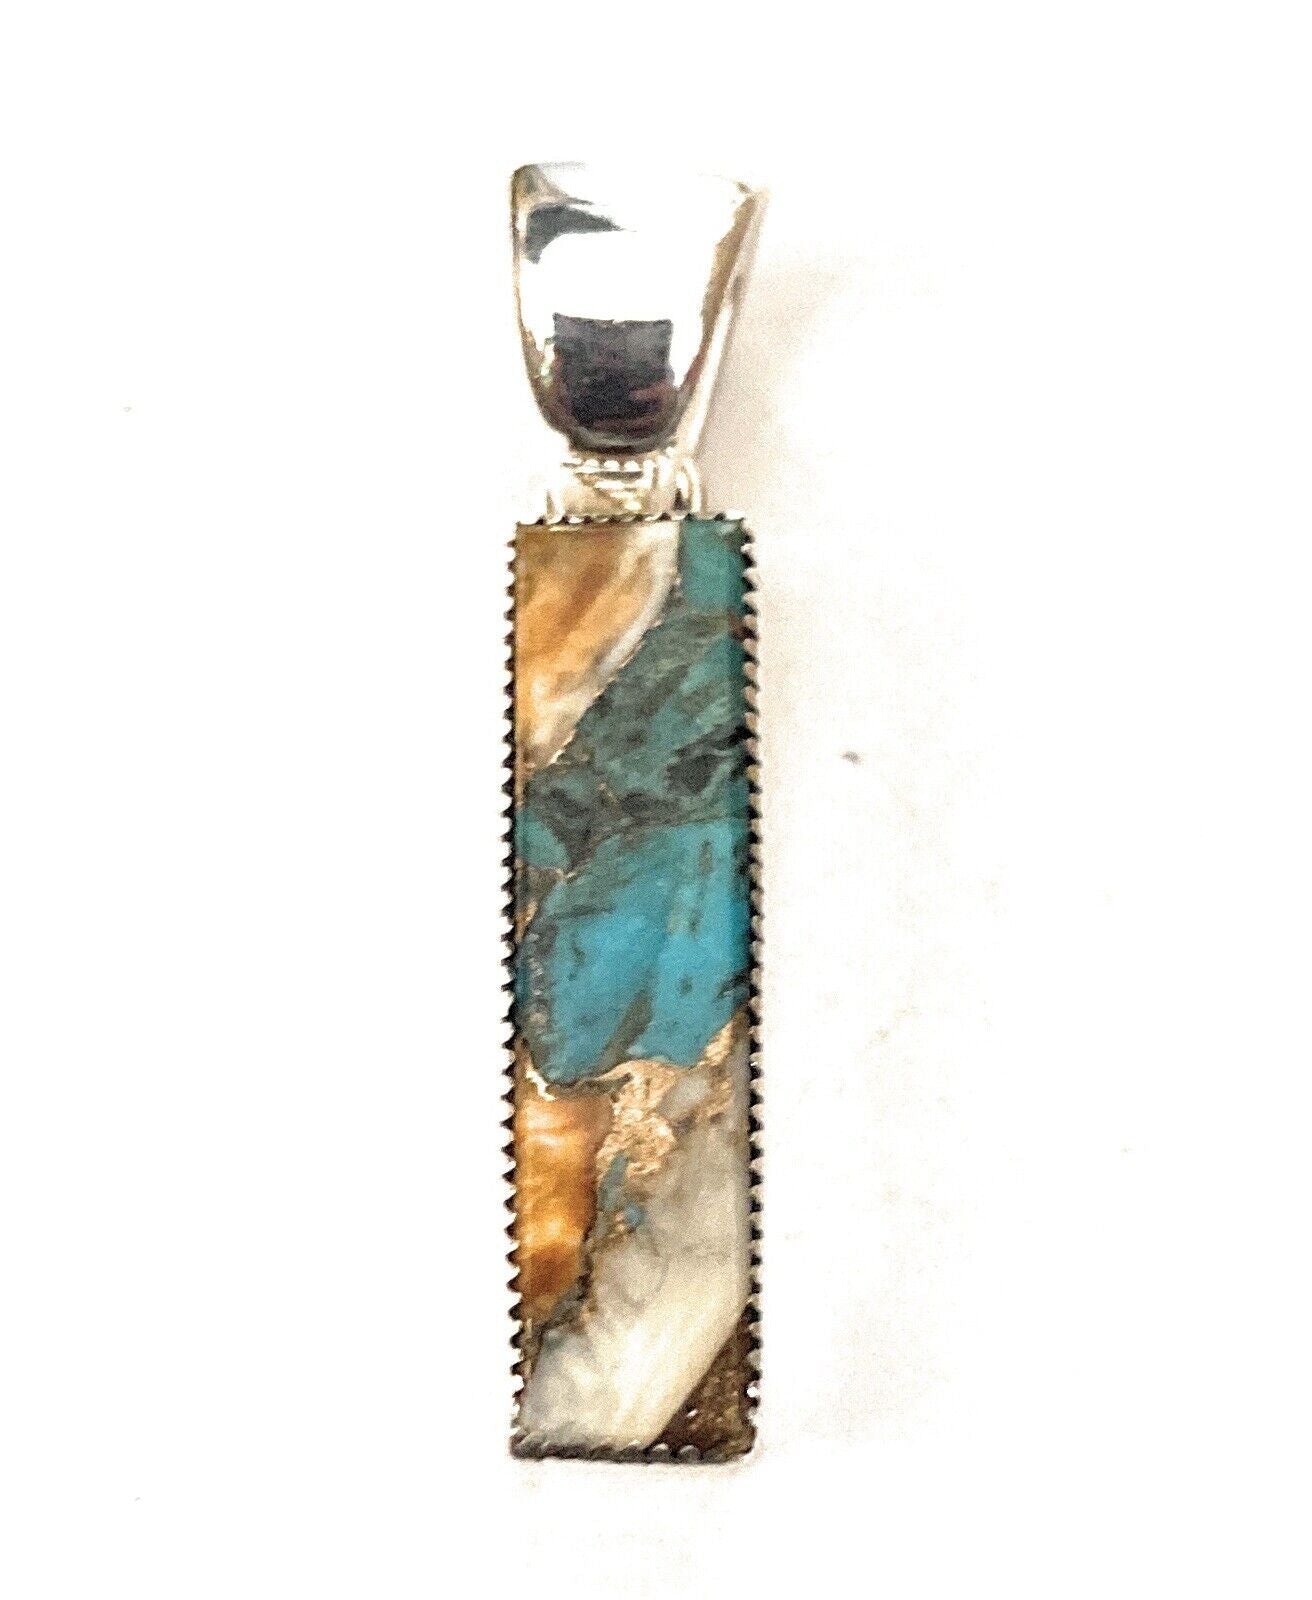 Navajo Sterling Silver & Multi Stone Spice Pendant Signed